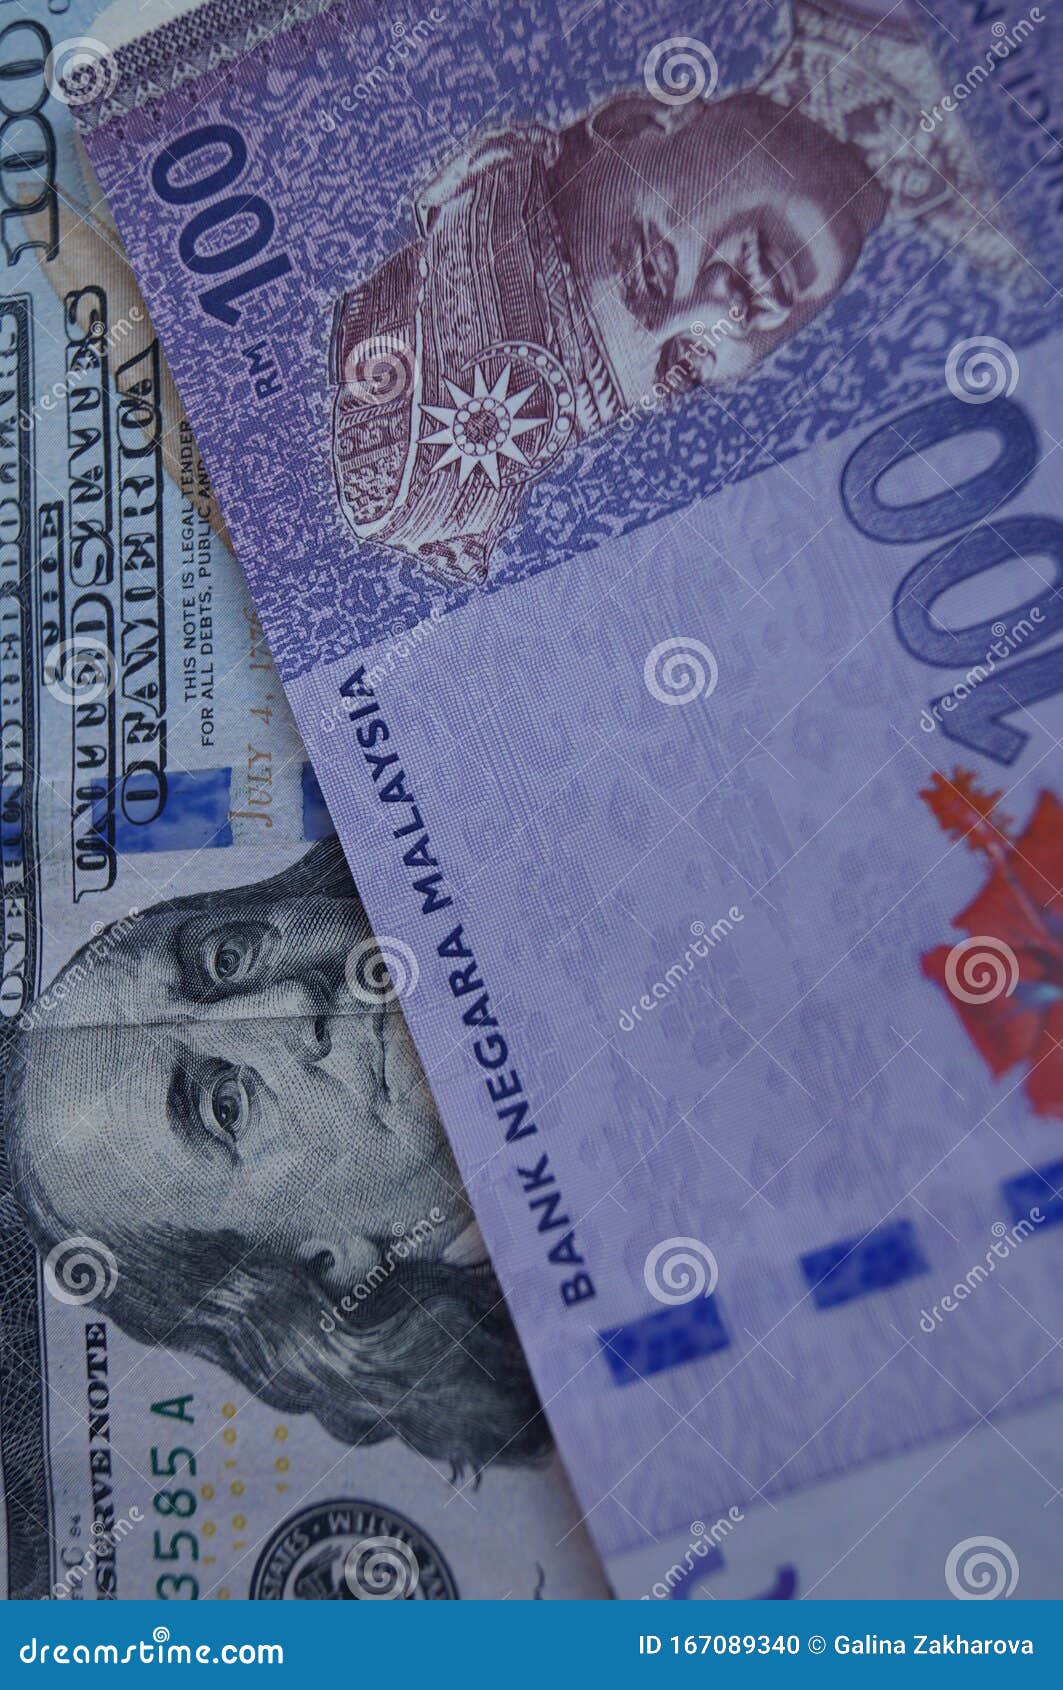 Malaysian ringgit in pakistani rupees